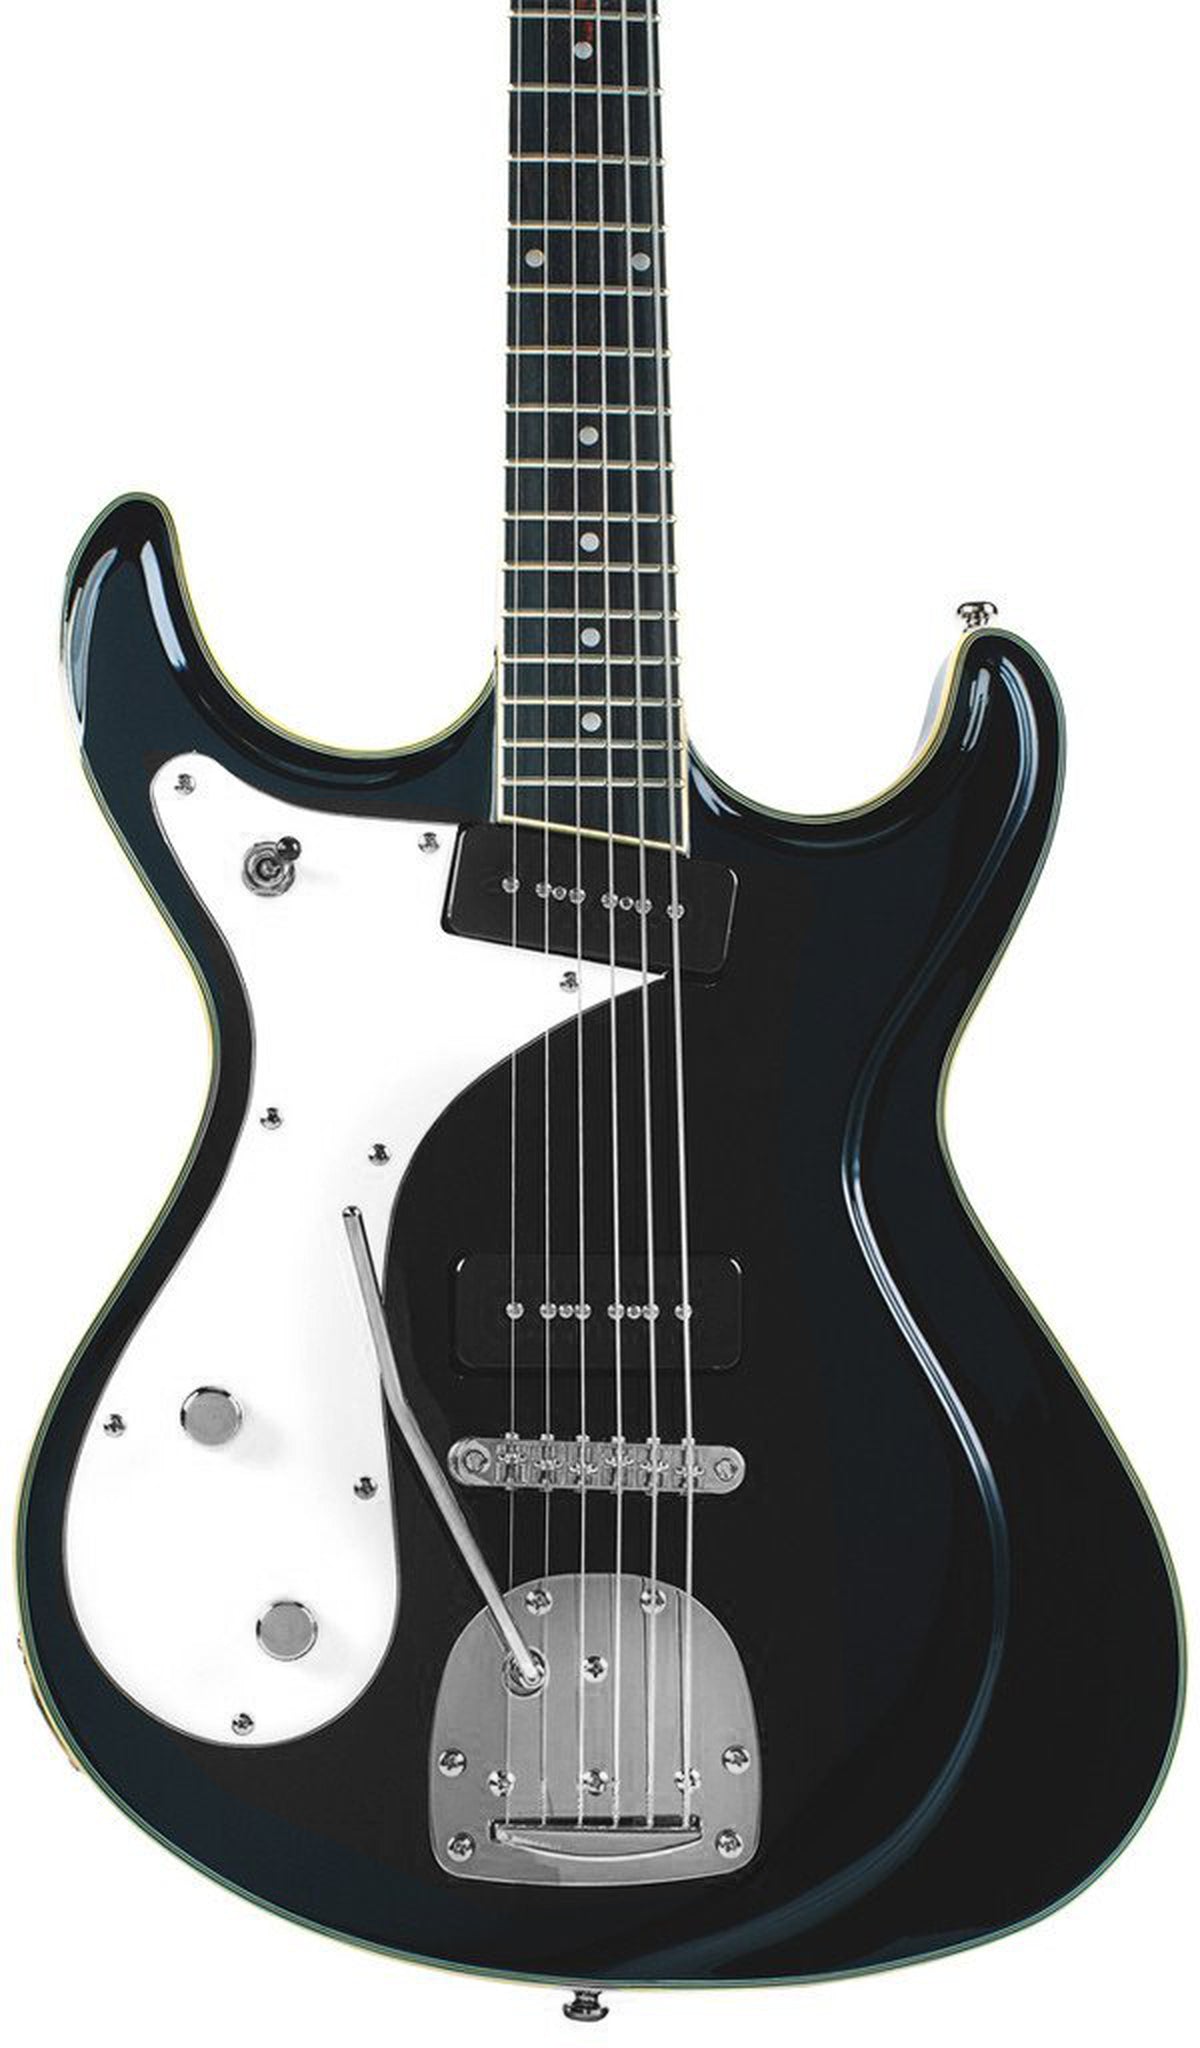 Eastwood Guitars Sidejack Baritone DLX Black